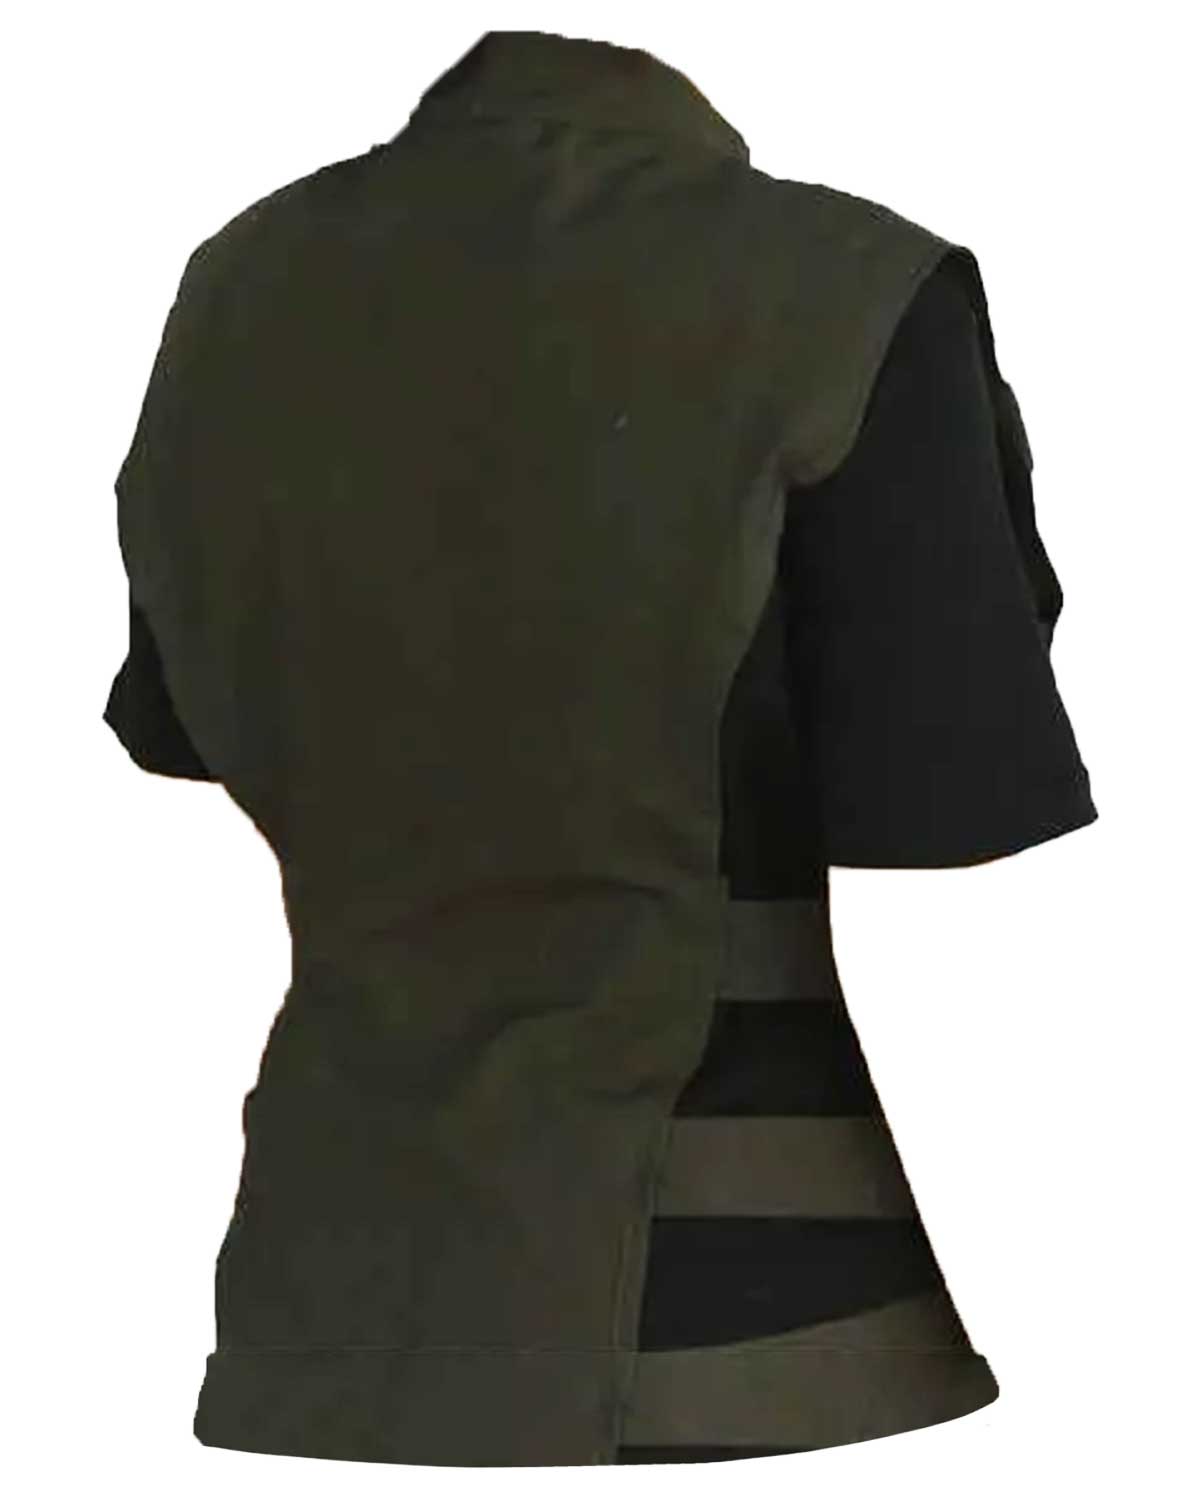 Black Widow Avengers Infinity War Leather Vest | Elite Jacket